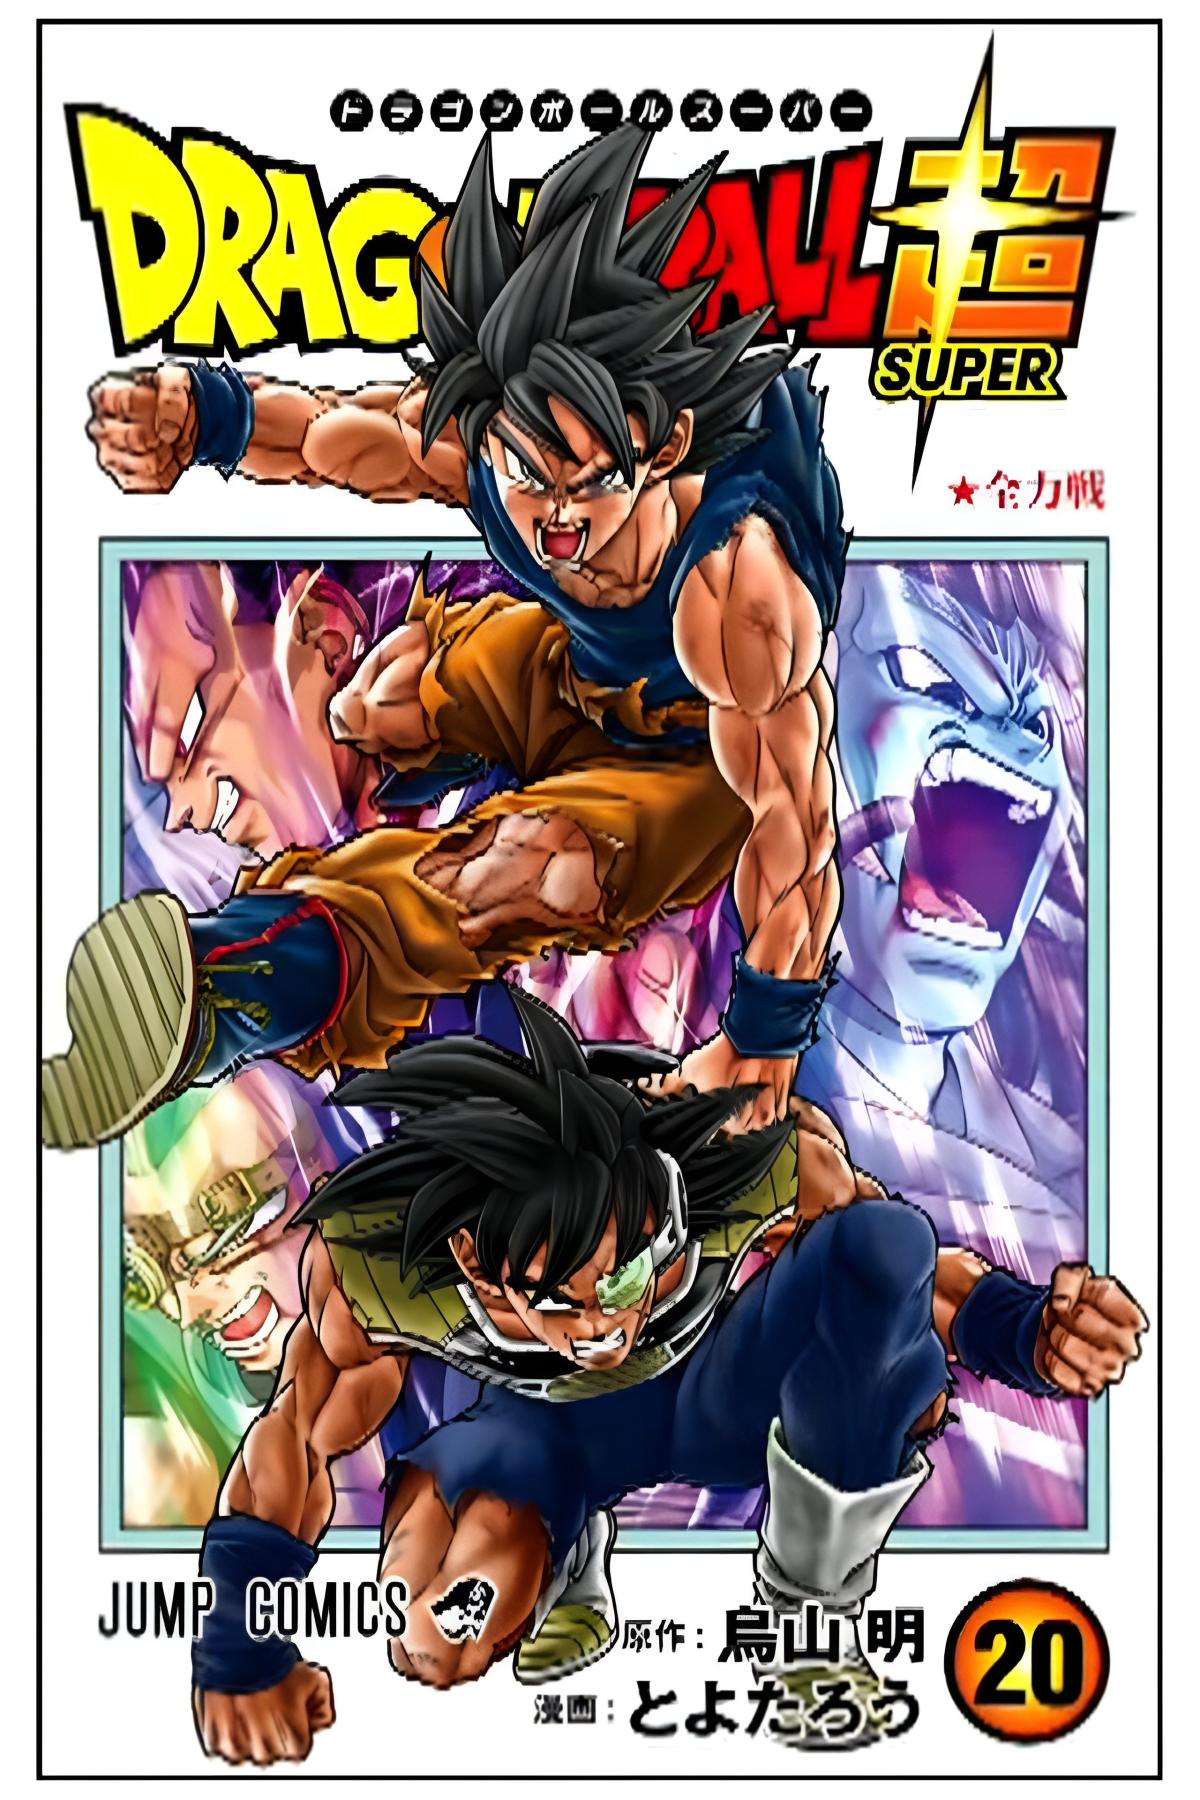 Dragon Ball Super - Desvelada la portada oficial del tomo 20 de la serie  manga. ¿Decepcionante? | Hobbyconsolas